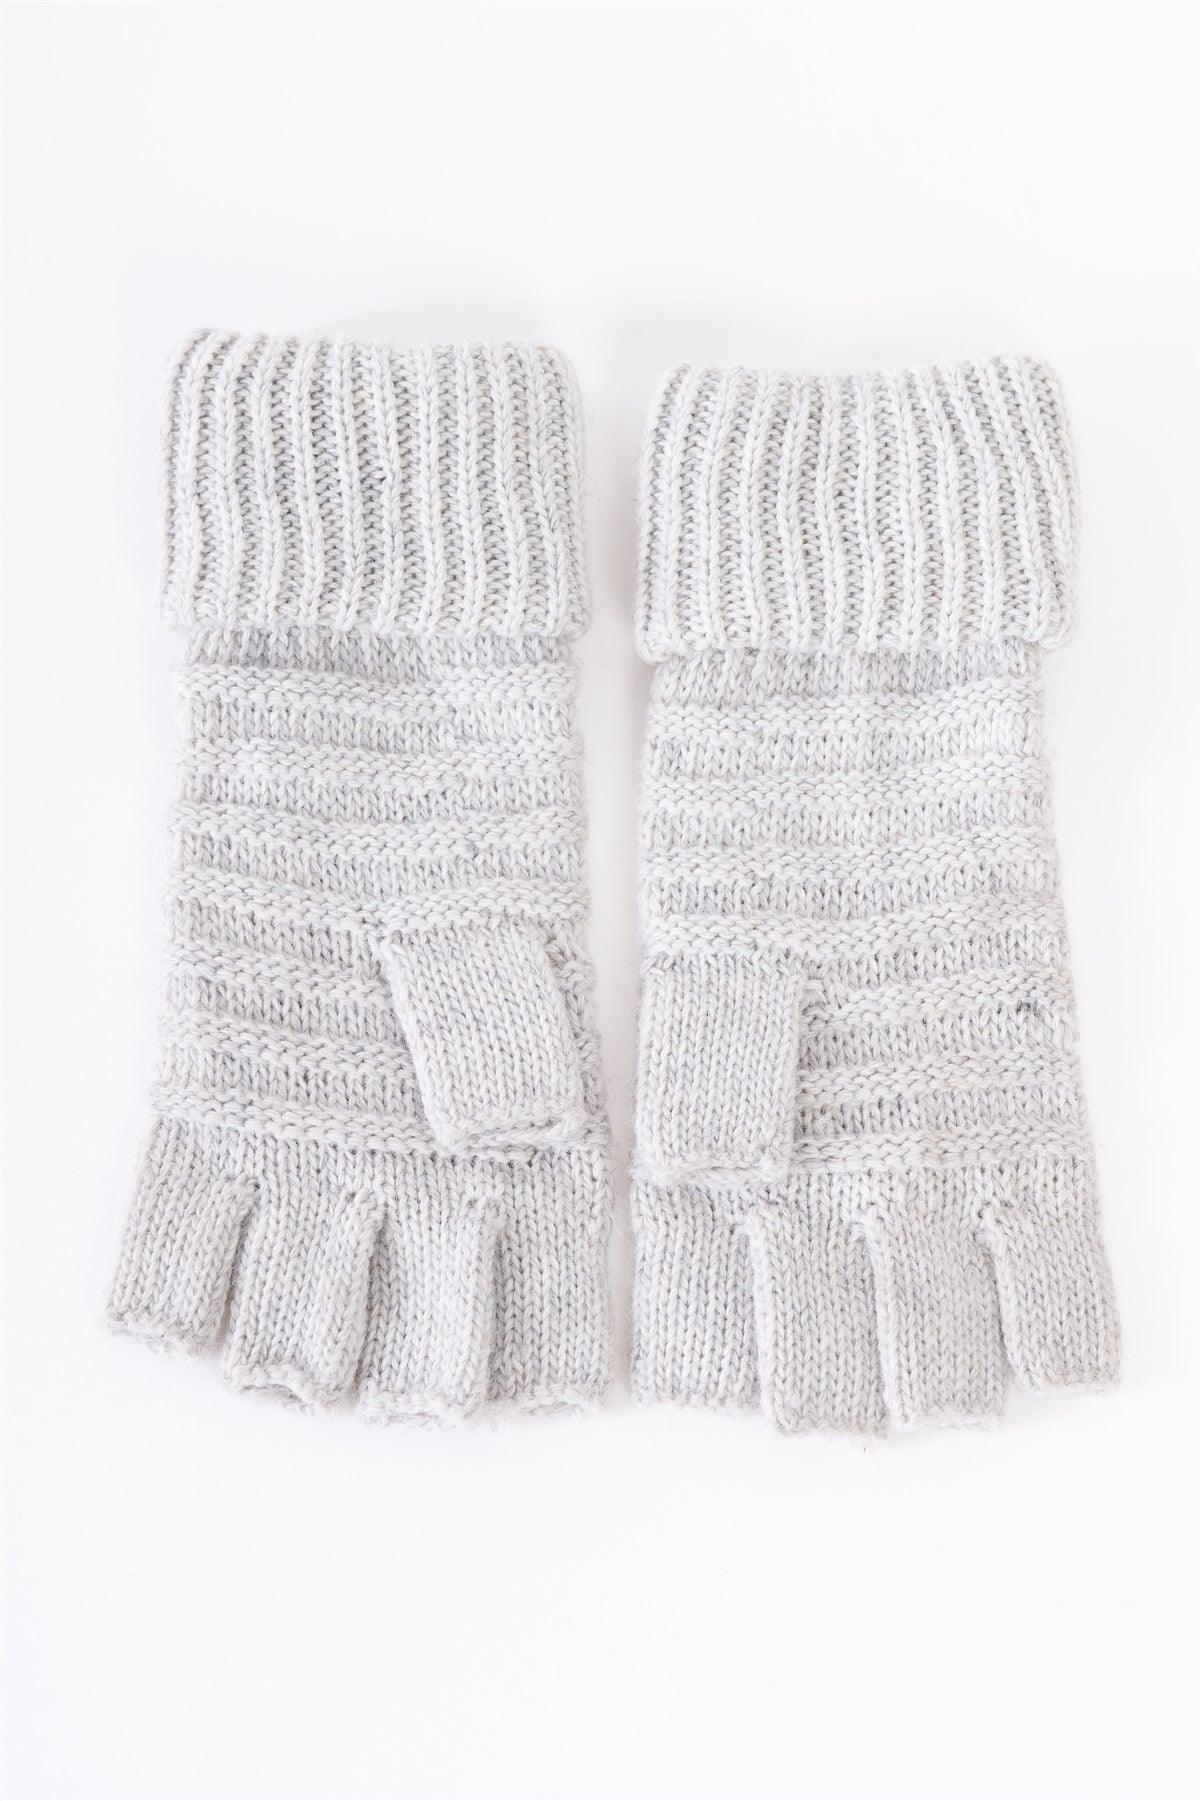 Grey Fingerless Button Detail Knit Winter Gloves /3 Pieces